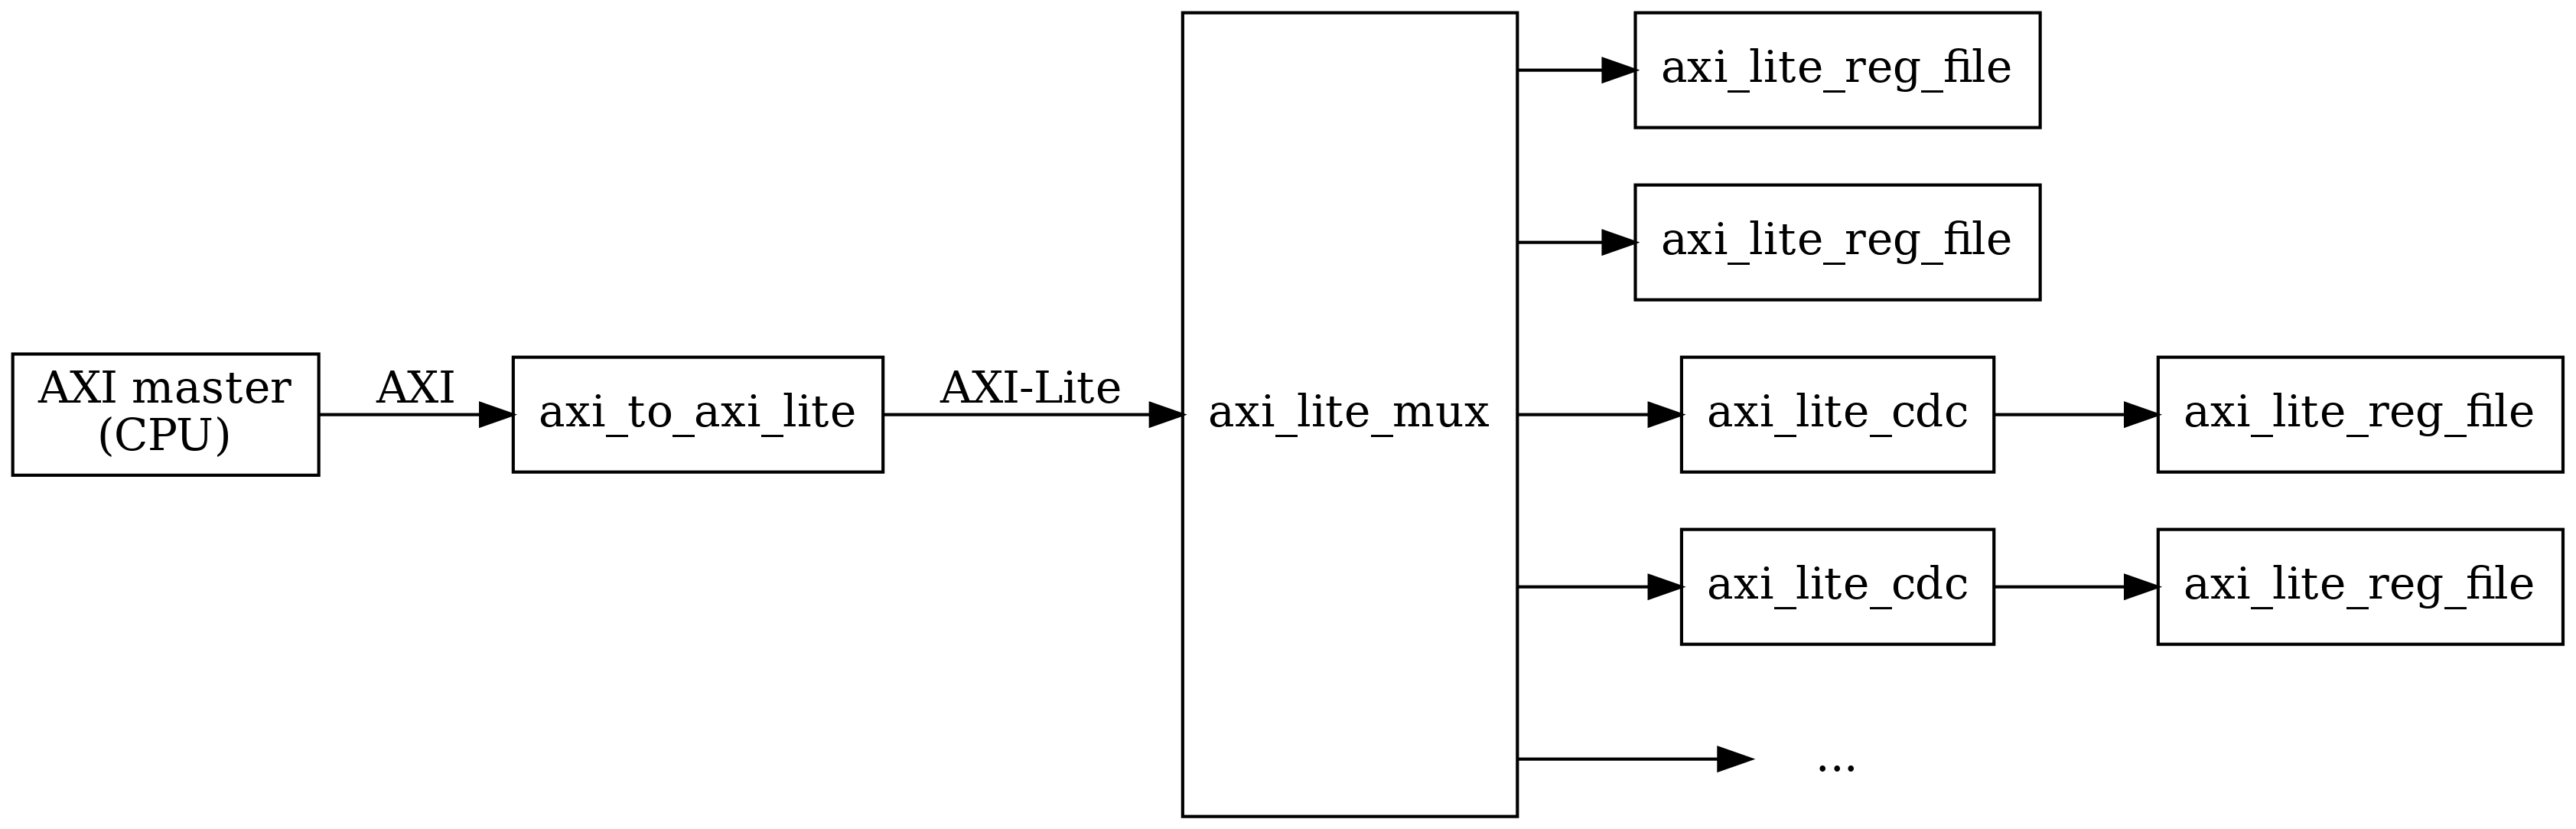 digraph my_graph {
graph [ dpi = 300 splines=ortho ];
rankdir="LR";

cpu [ label="AXI master\n(CPU)" shape=box ];
cpu -> axi_to_axi_lite [label="AXI"];

axi_to_axi_lite [ label="axi_to_axi_lite" shape=box ];
axi_to_axi_lite -> axi_lite_mux  [label="AXI-Lite" ];

axi_lite_mux [ label="axi_lite_mux" shape=box height=3.5 ];

axi_lite_mux -> axi_lite_reg_file0;
axi_lite_reg_file0 [ label="axi_lite_reg_file" shape=box ];

axi_lite_mux -> axi_lite_reg_file1;
axi_lite_reg_file1 [ label="axi_lite_reg_file" shape=box ];

axi_lite_mux -> axi_lite_cdc2;
axi_lite_cdc2 [ label="axi_lite_cdc" shape=box ];
axi_lite_cdc2 -> axi_lite_reg_file2;
axi_lite_reg_file2 [ label="axi_lite_reg_file" shape=box ];

axi_lite_mux -> axi_lite_cdc3;
axi_lite_cdc3 [ label="axi_lite_cdc" shape=box ];
axi_lite_cdc3 -> axi_lite_reg_file3;
axi_lite_reg_file3 [ label="axi_lite_reg_file" shape=box ];

dots [ shape=none label="..."];
axi_lite_mux -> dots;
}